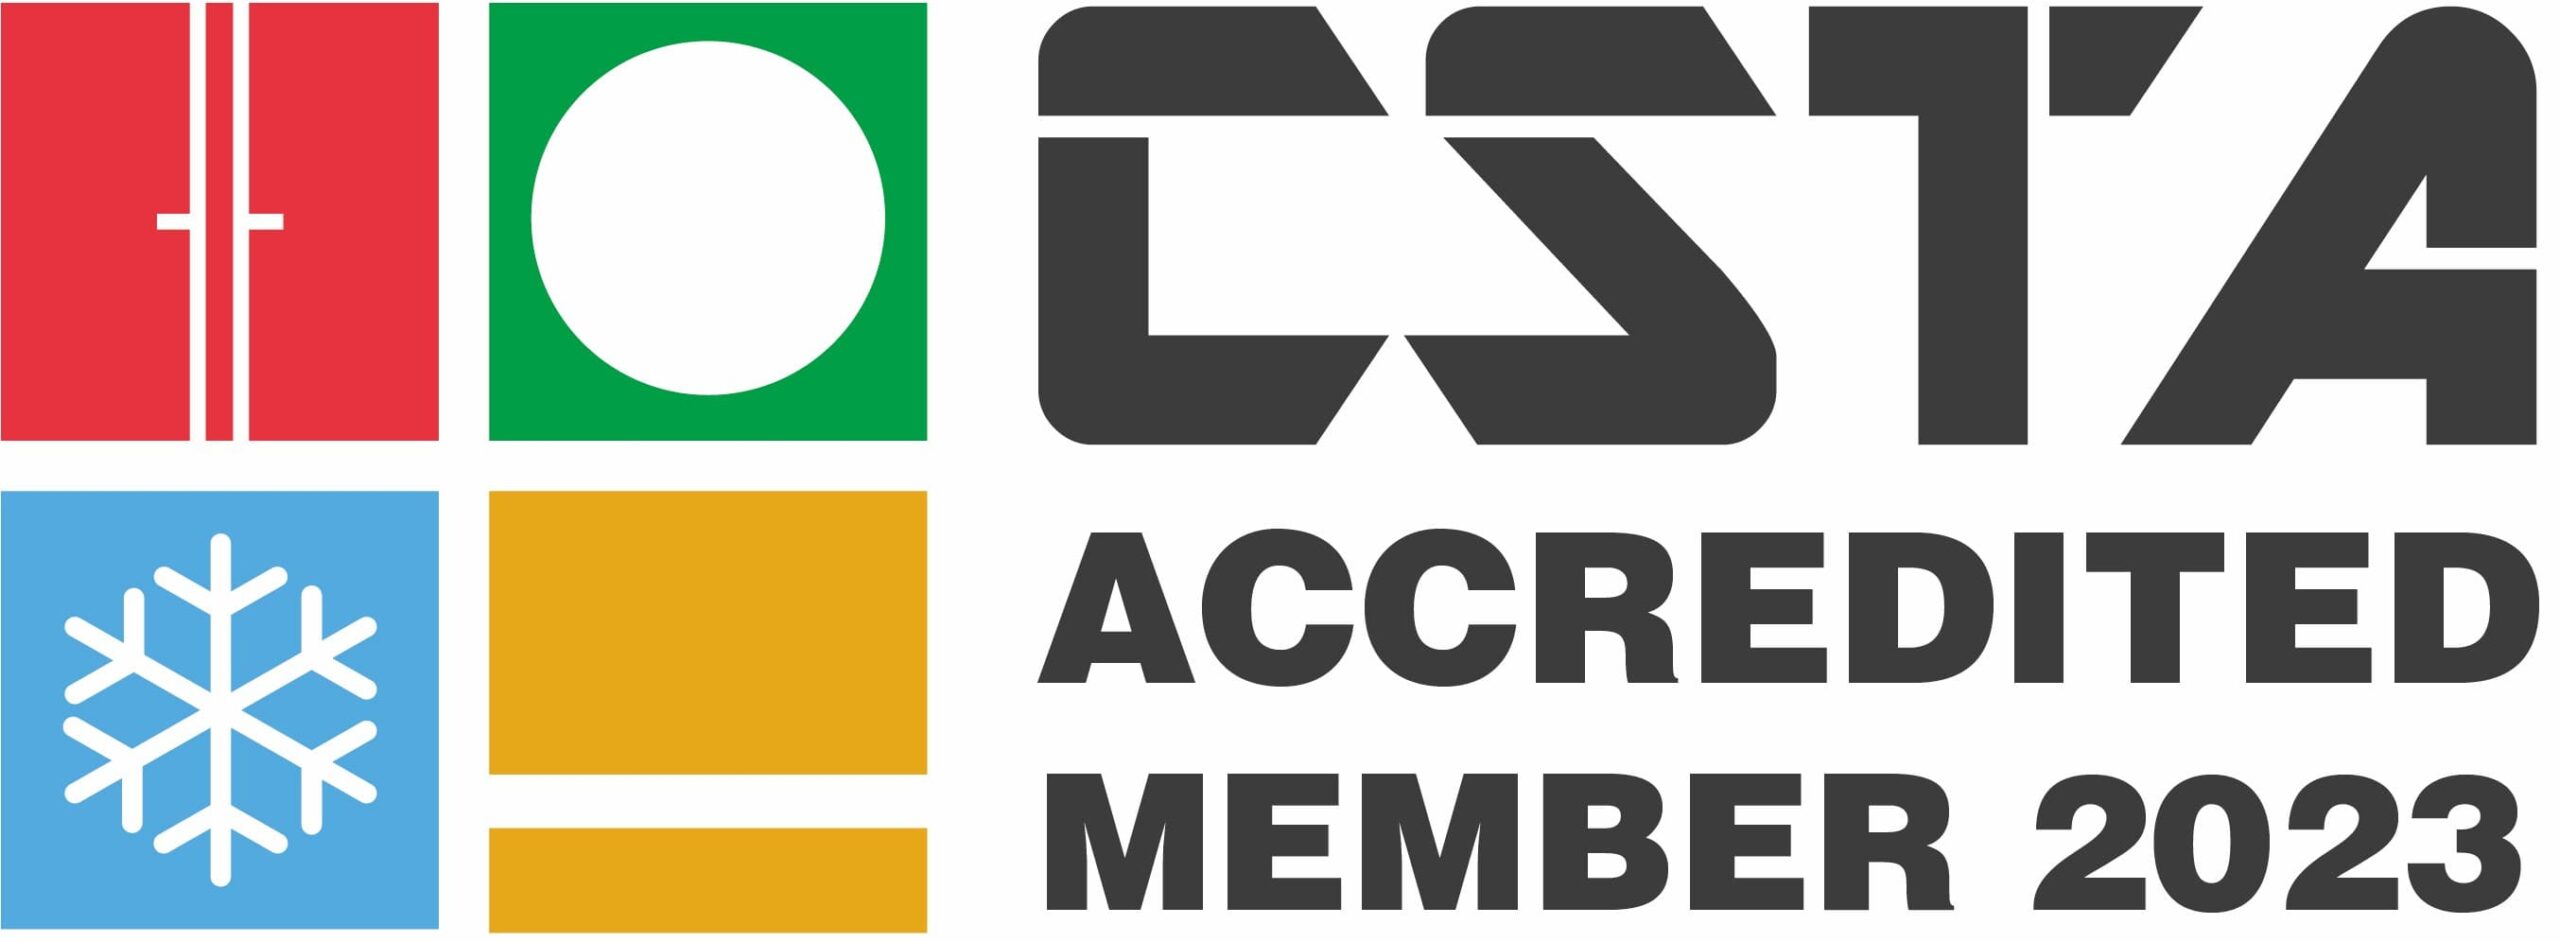 CSTA Accredited Member 2023 (1)